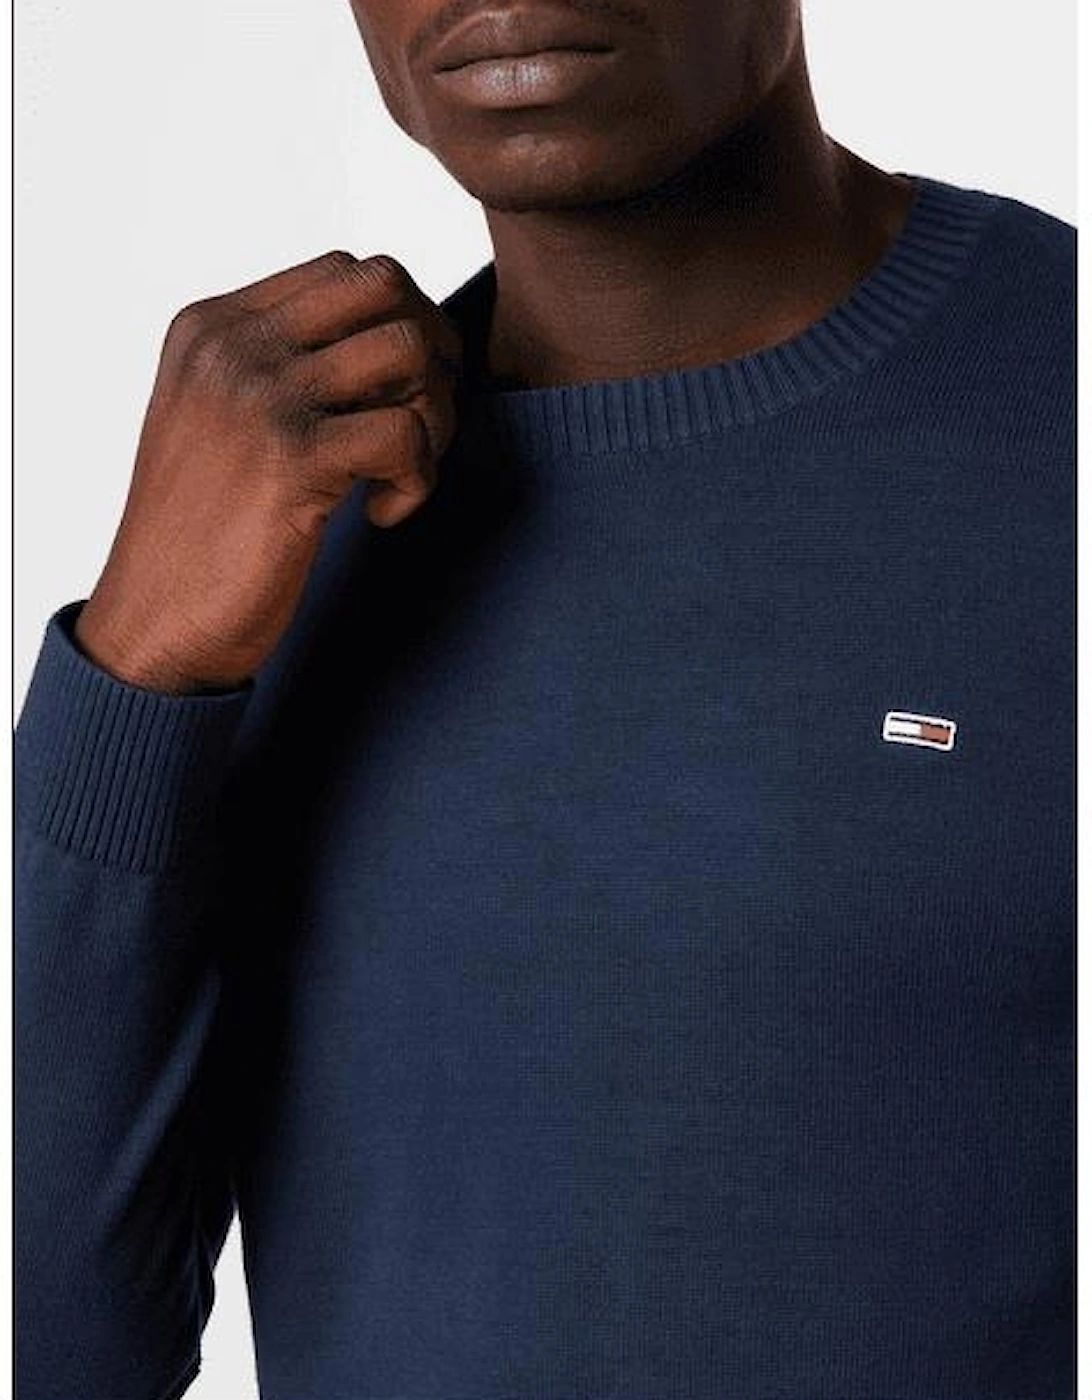 Cotton Embroidered Logo Knit Navy Sweatshirt